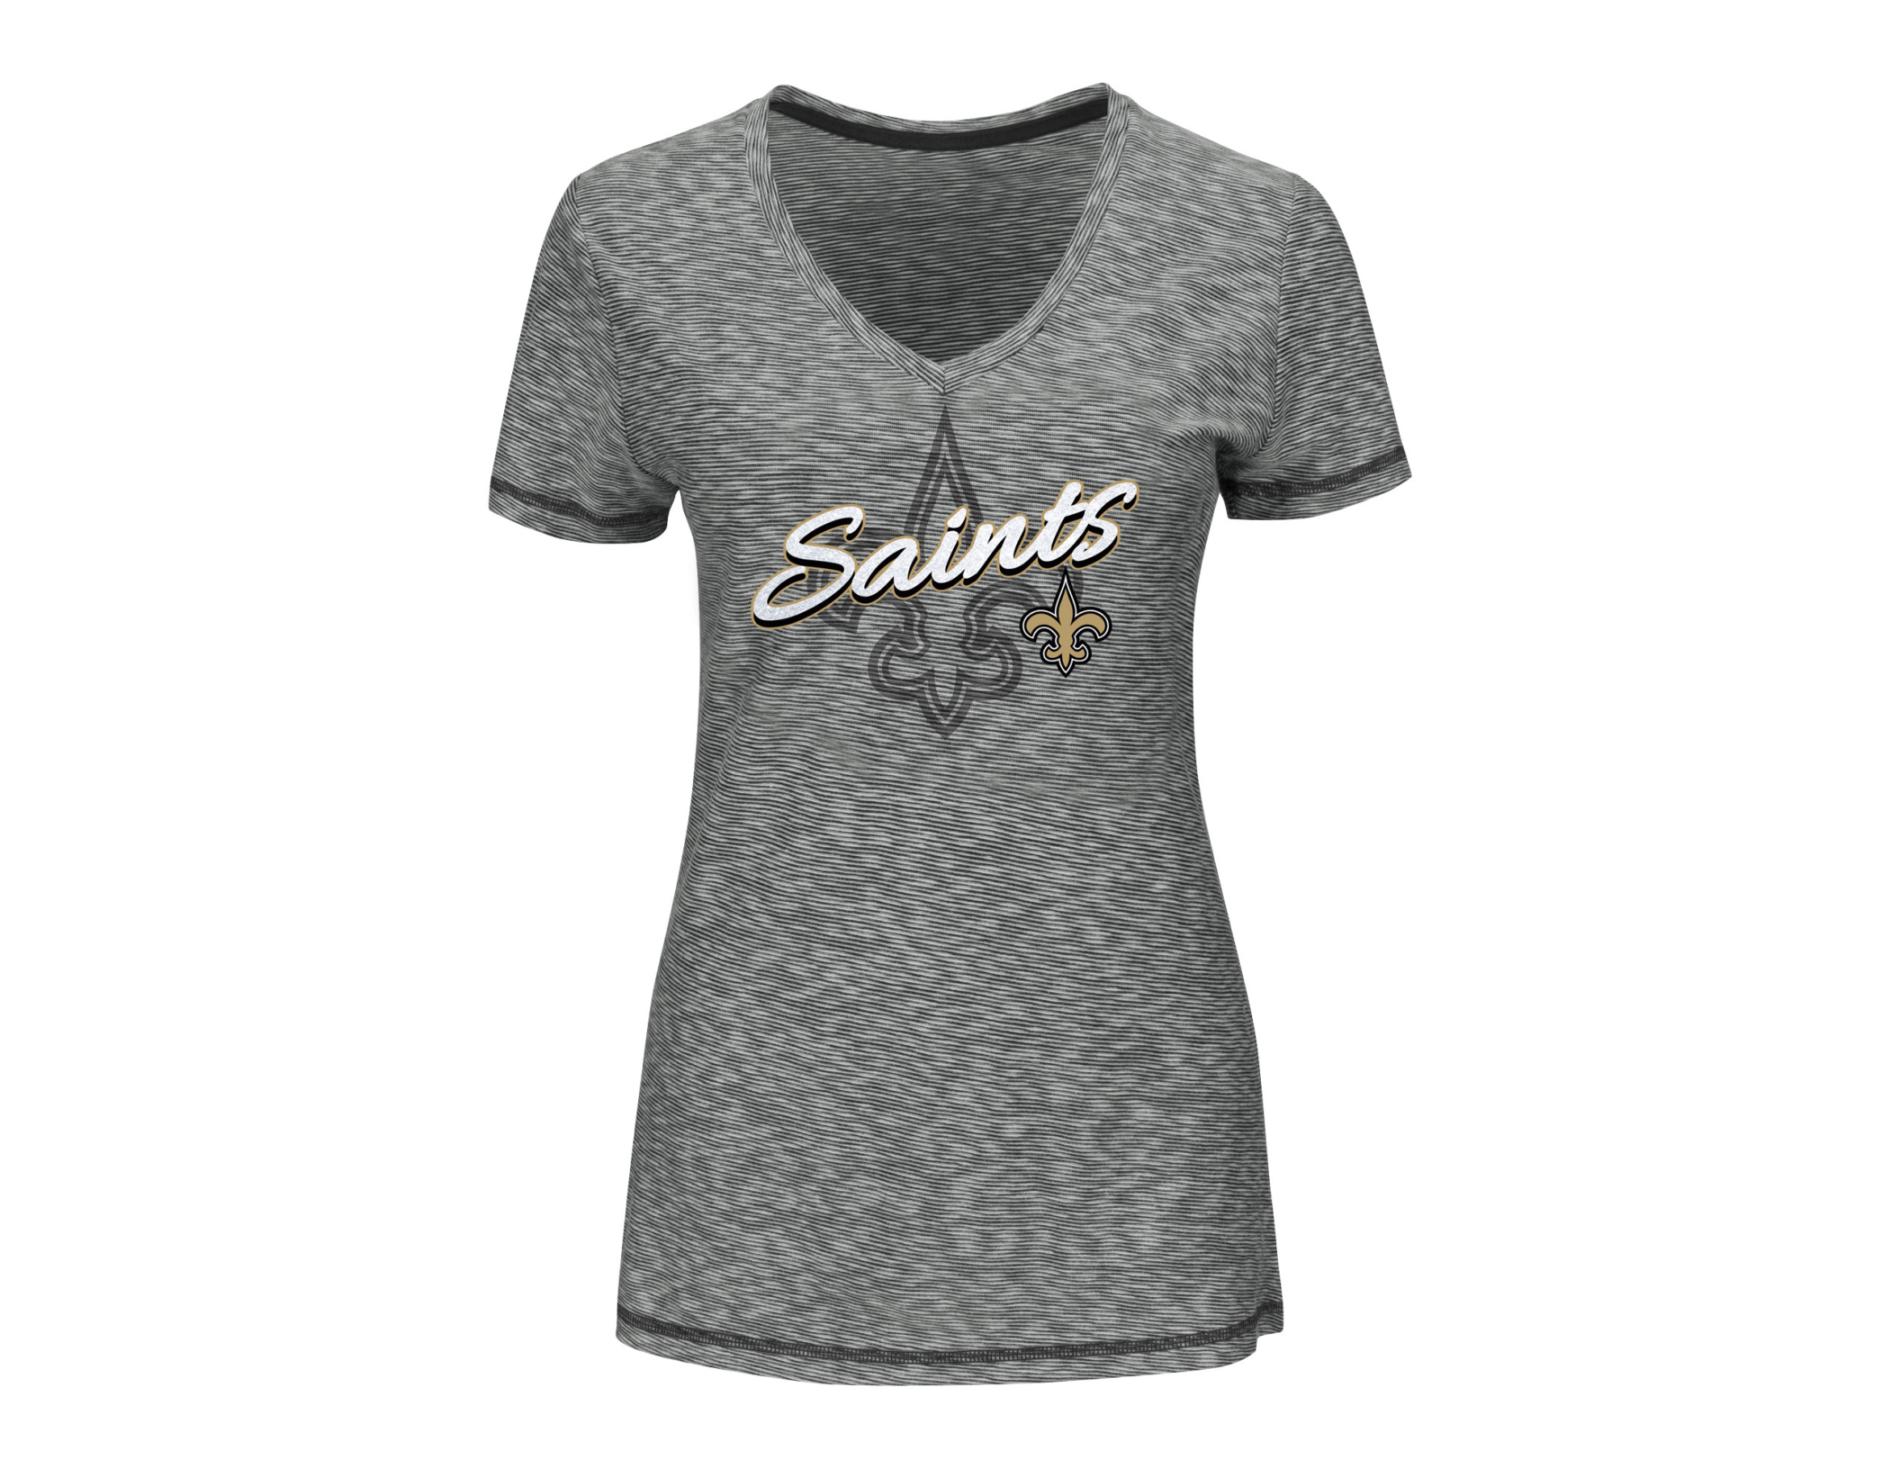 NFL Women's Ribbed Graphic T-Shirt - New Orleans Saints